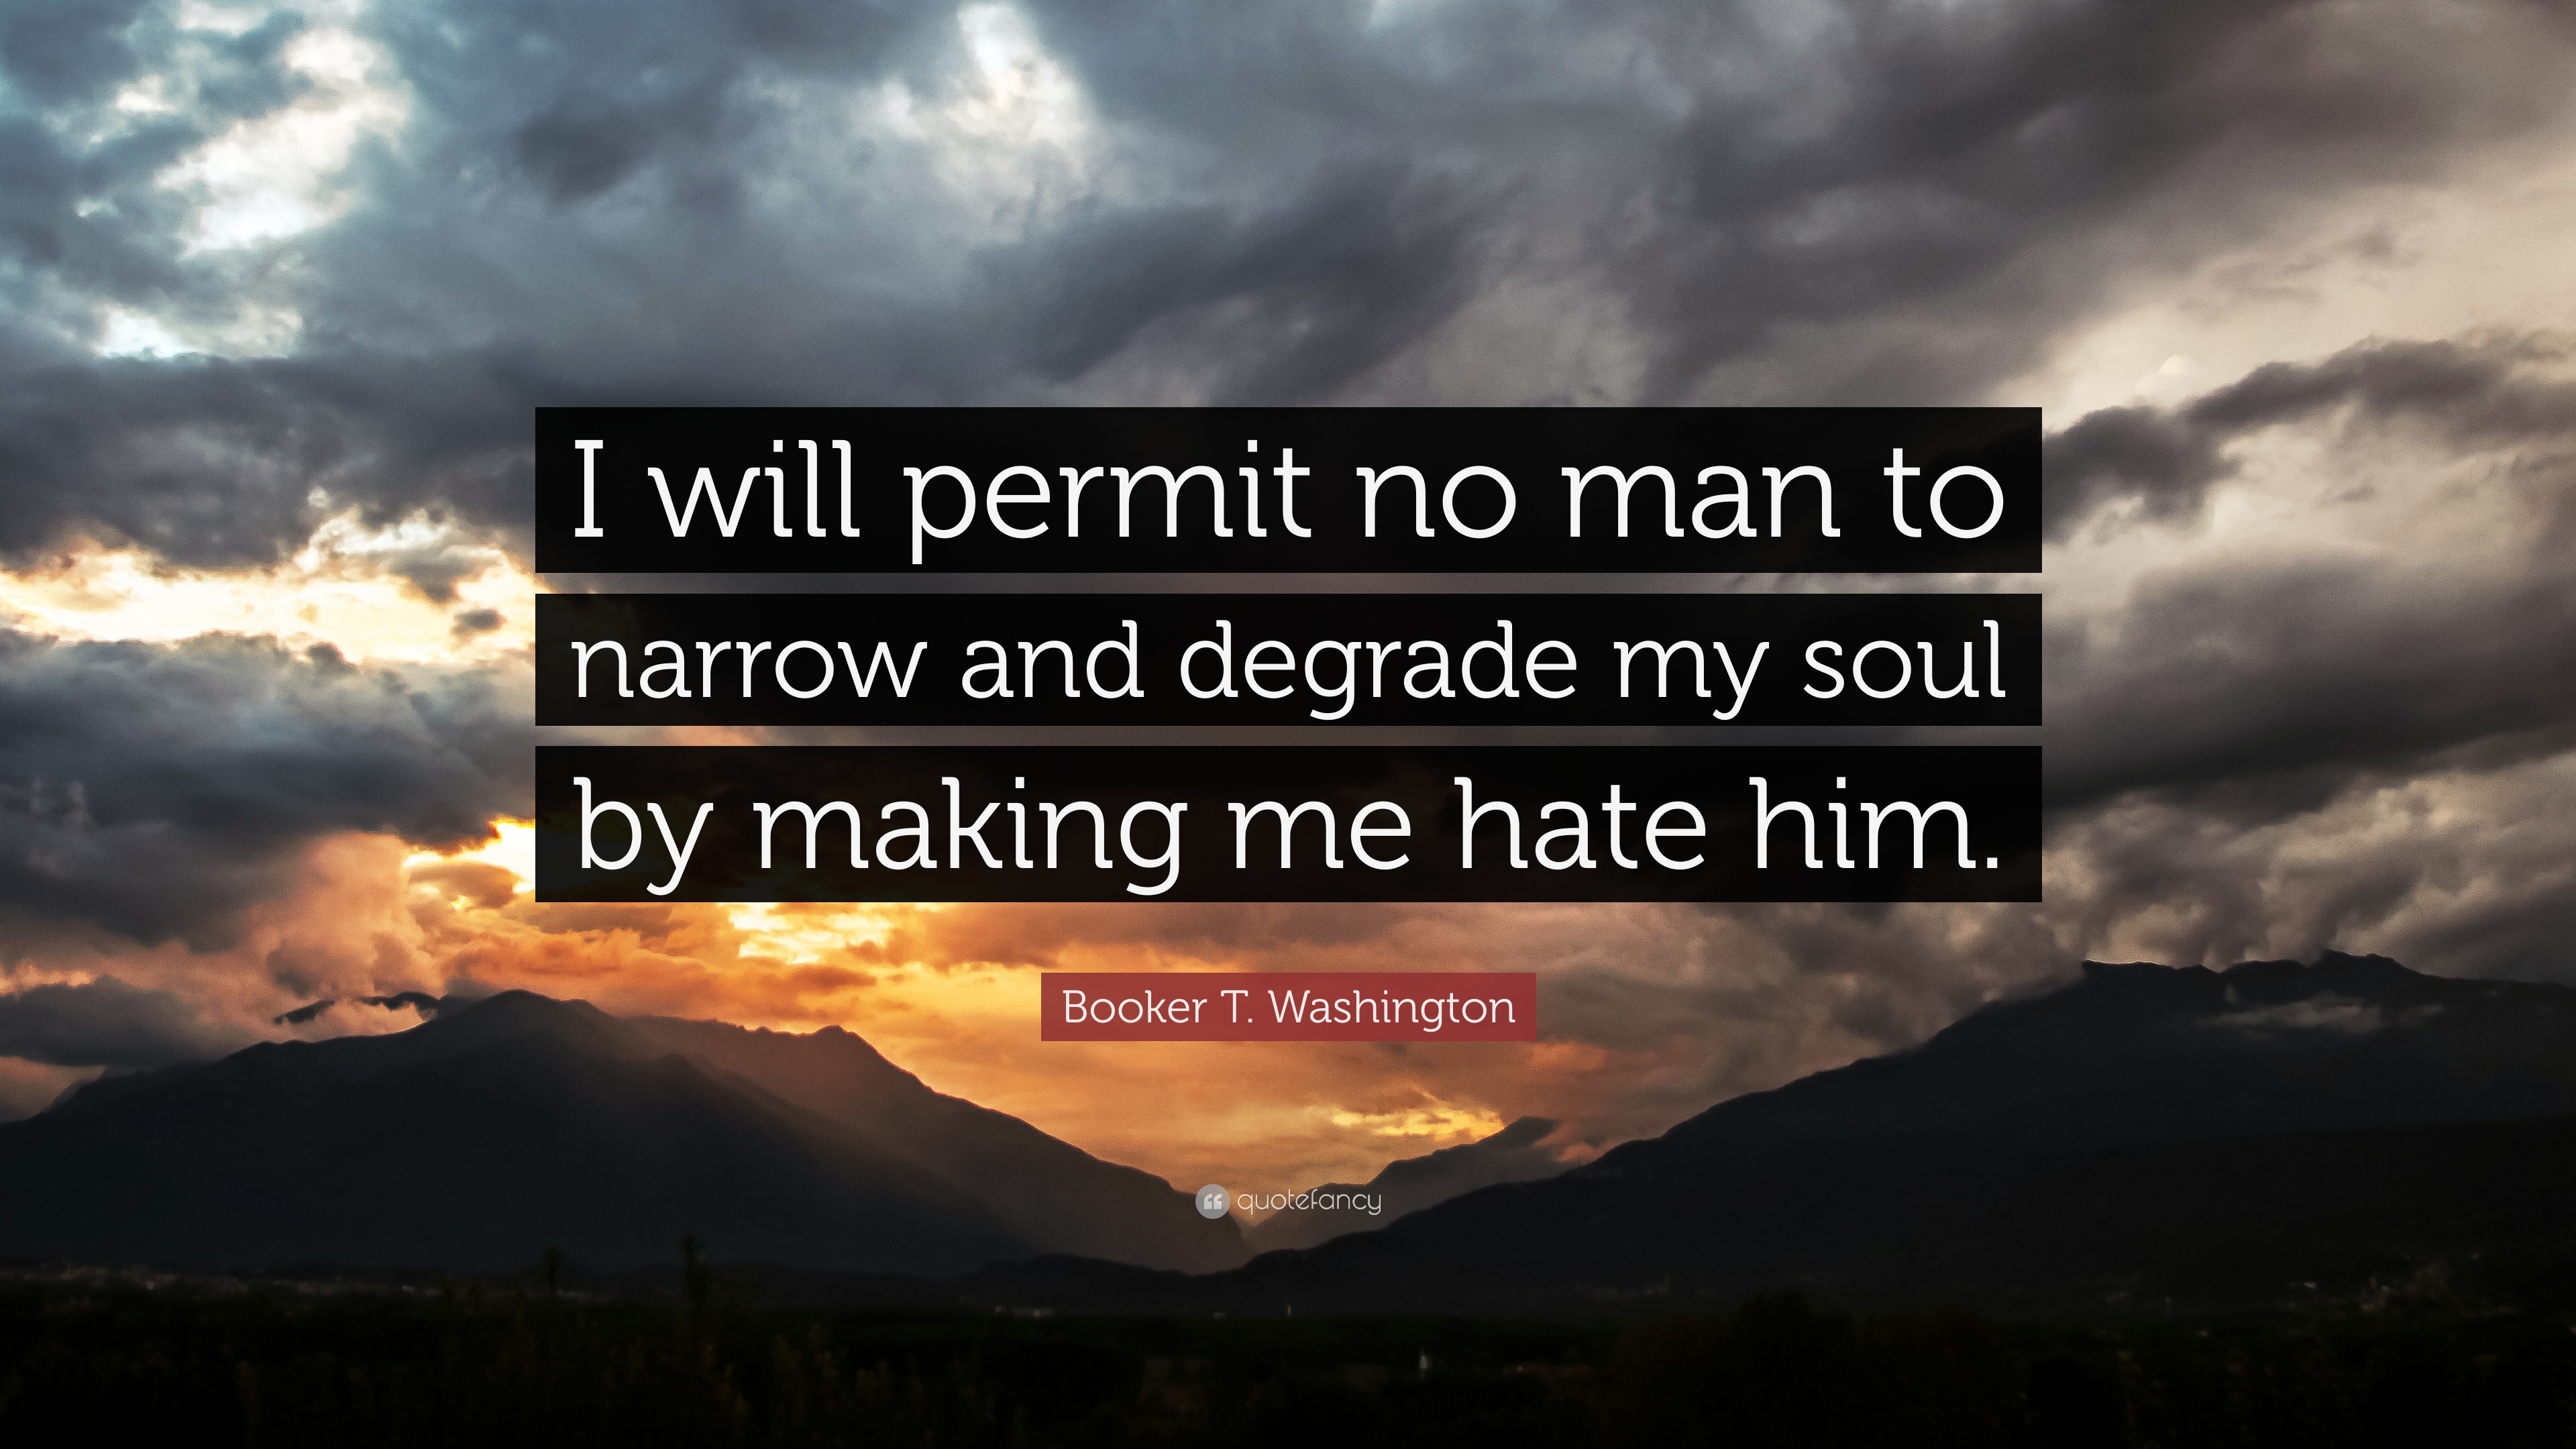 Booker T. Washington Quote: “I will permit no man to narrow and degrade ...